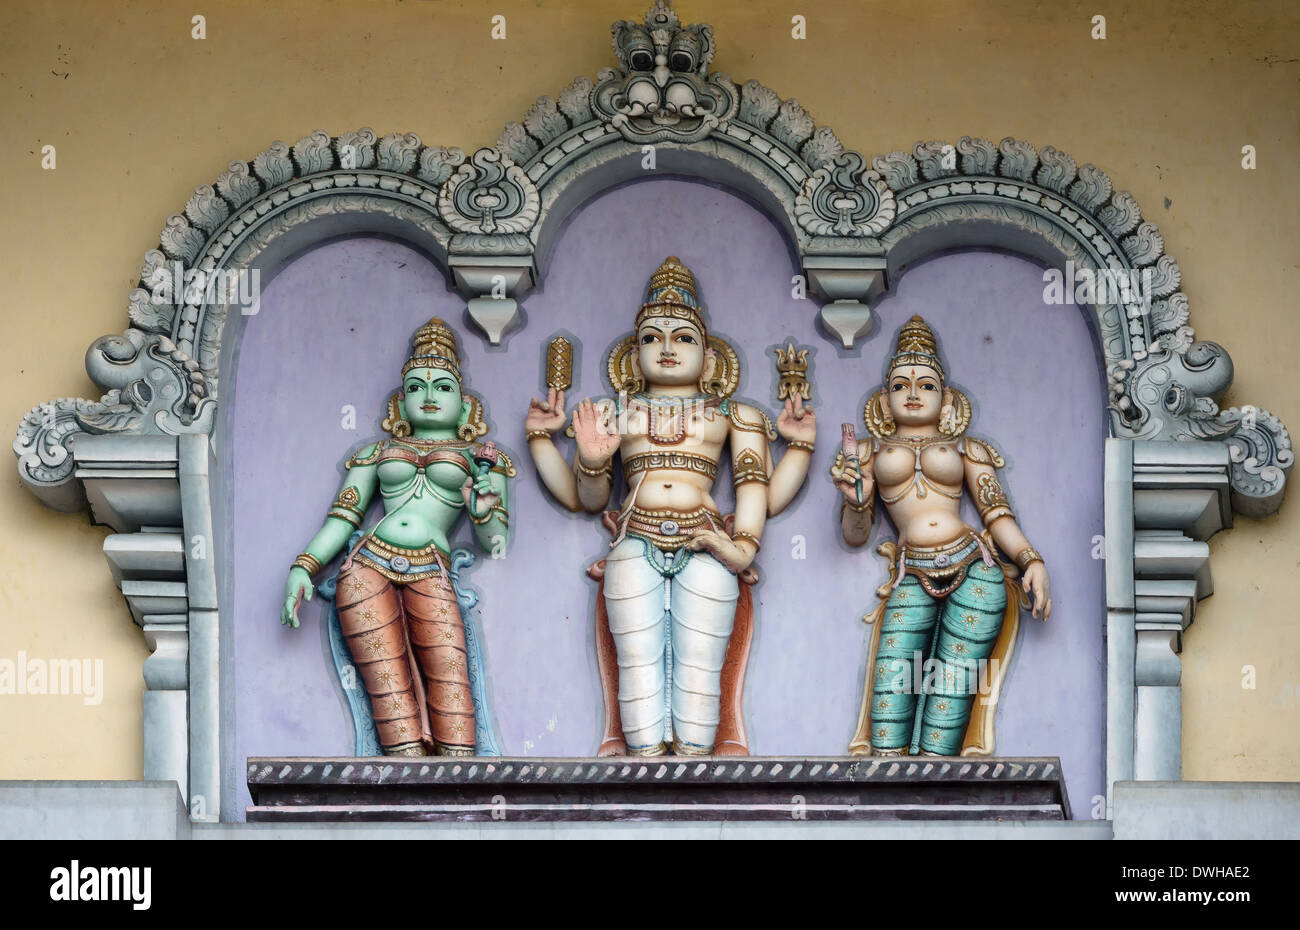 Lord Murugan and his two wives, Valli and Deivayanai at Rathinagiri Hill Temple in Vellore, Tamil Nadu, India. Stock Photo